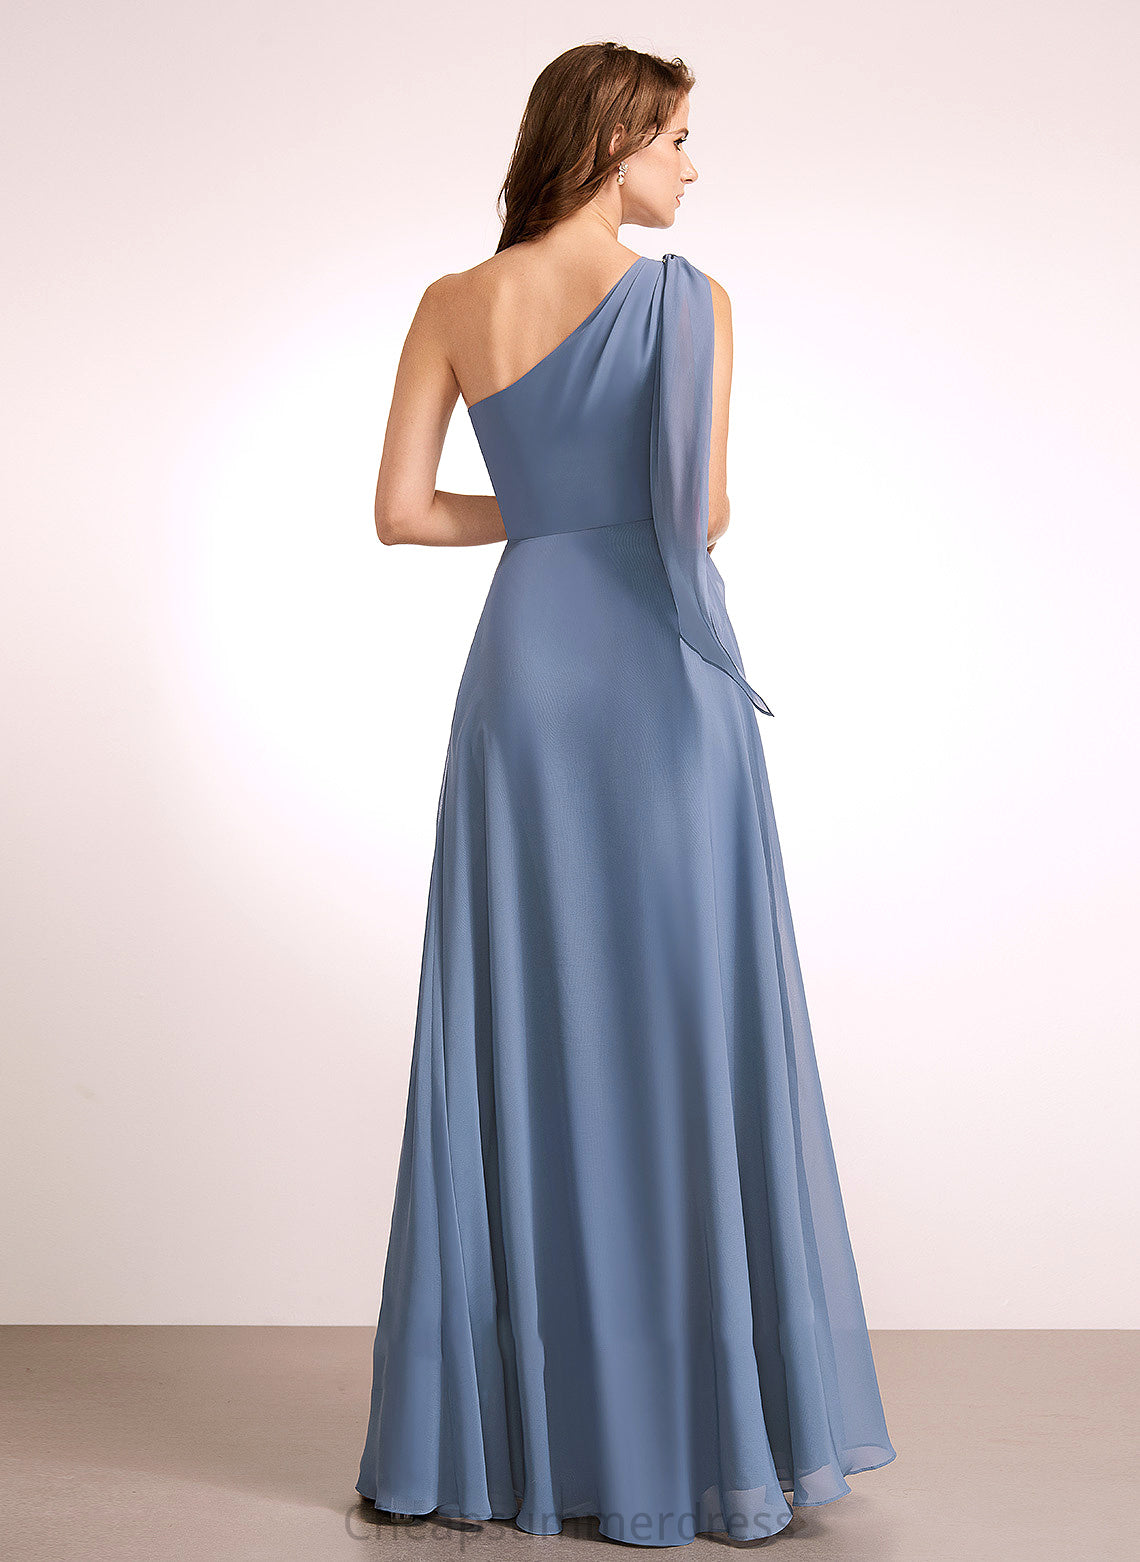 Bow(s) Silhouette Length One-Shoulder A-Line Floor-Length Embellishment Neckline Fabric Maddison Natural Waist Sleeveless